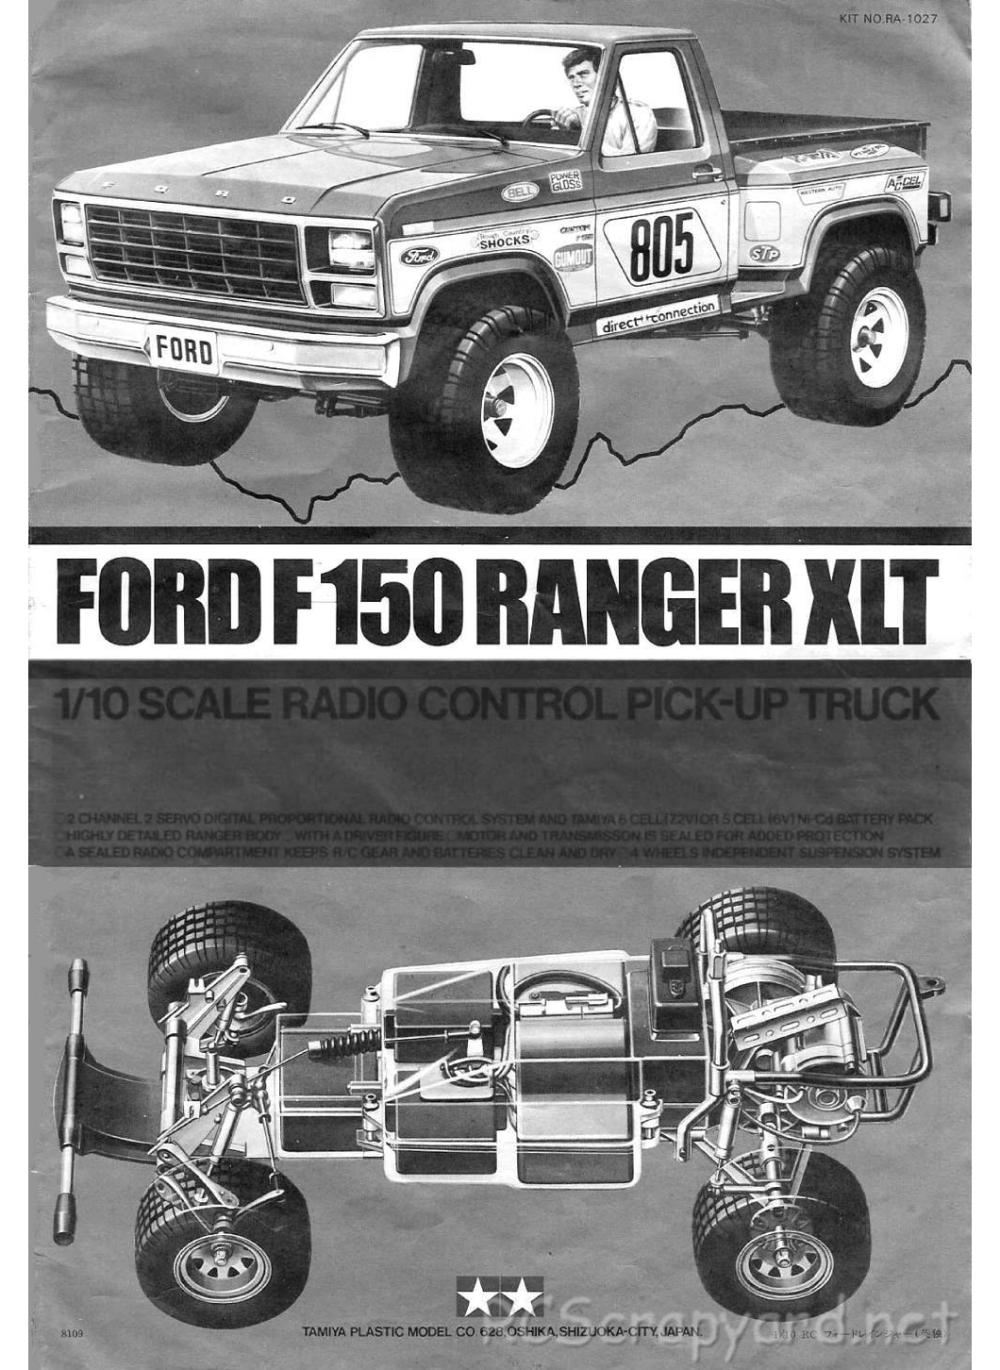 Tamiya - Ford F-150 Ranger XLT - 58027 - Manual